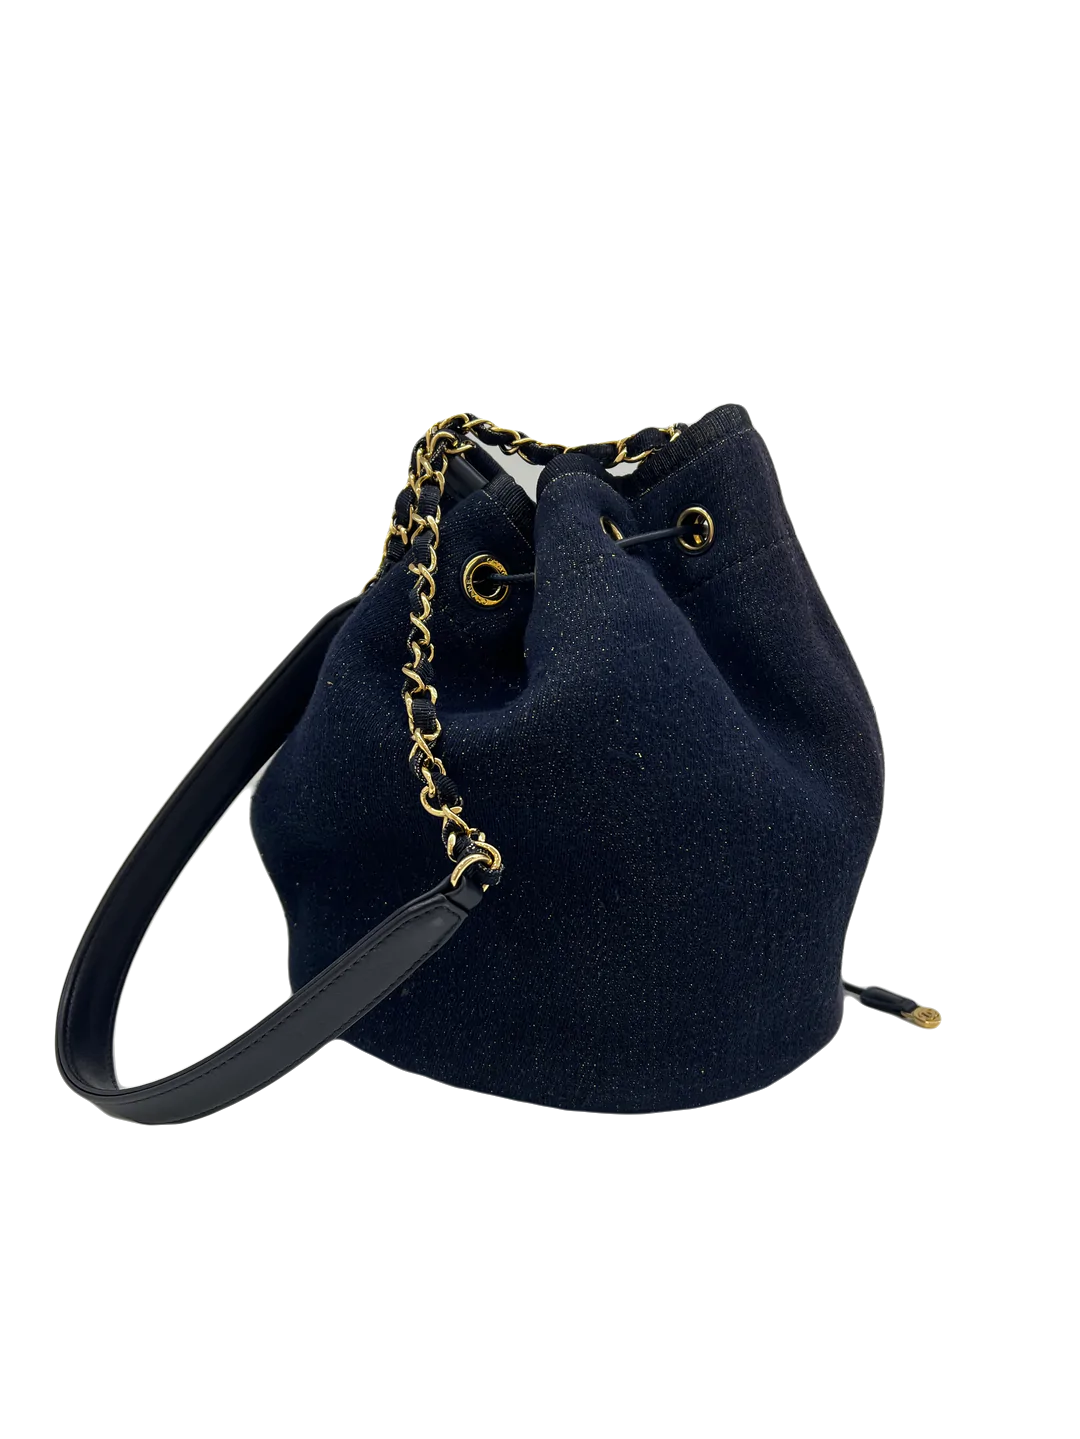 Chanel Bucket Bag Navy/Gold - SOLD